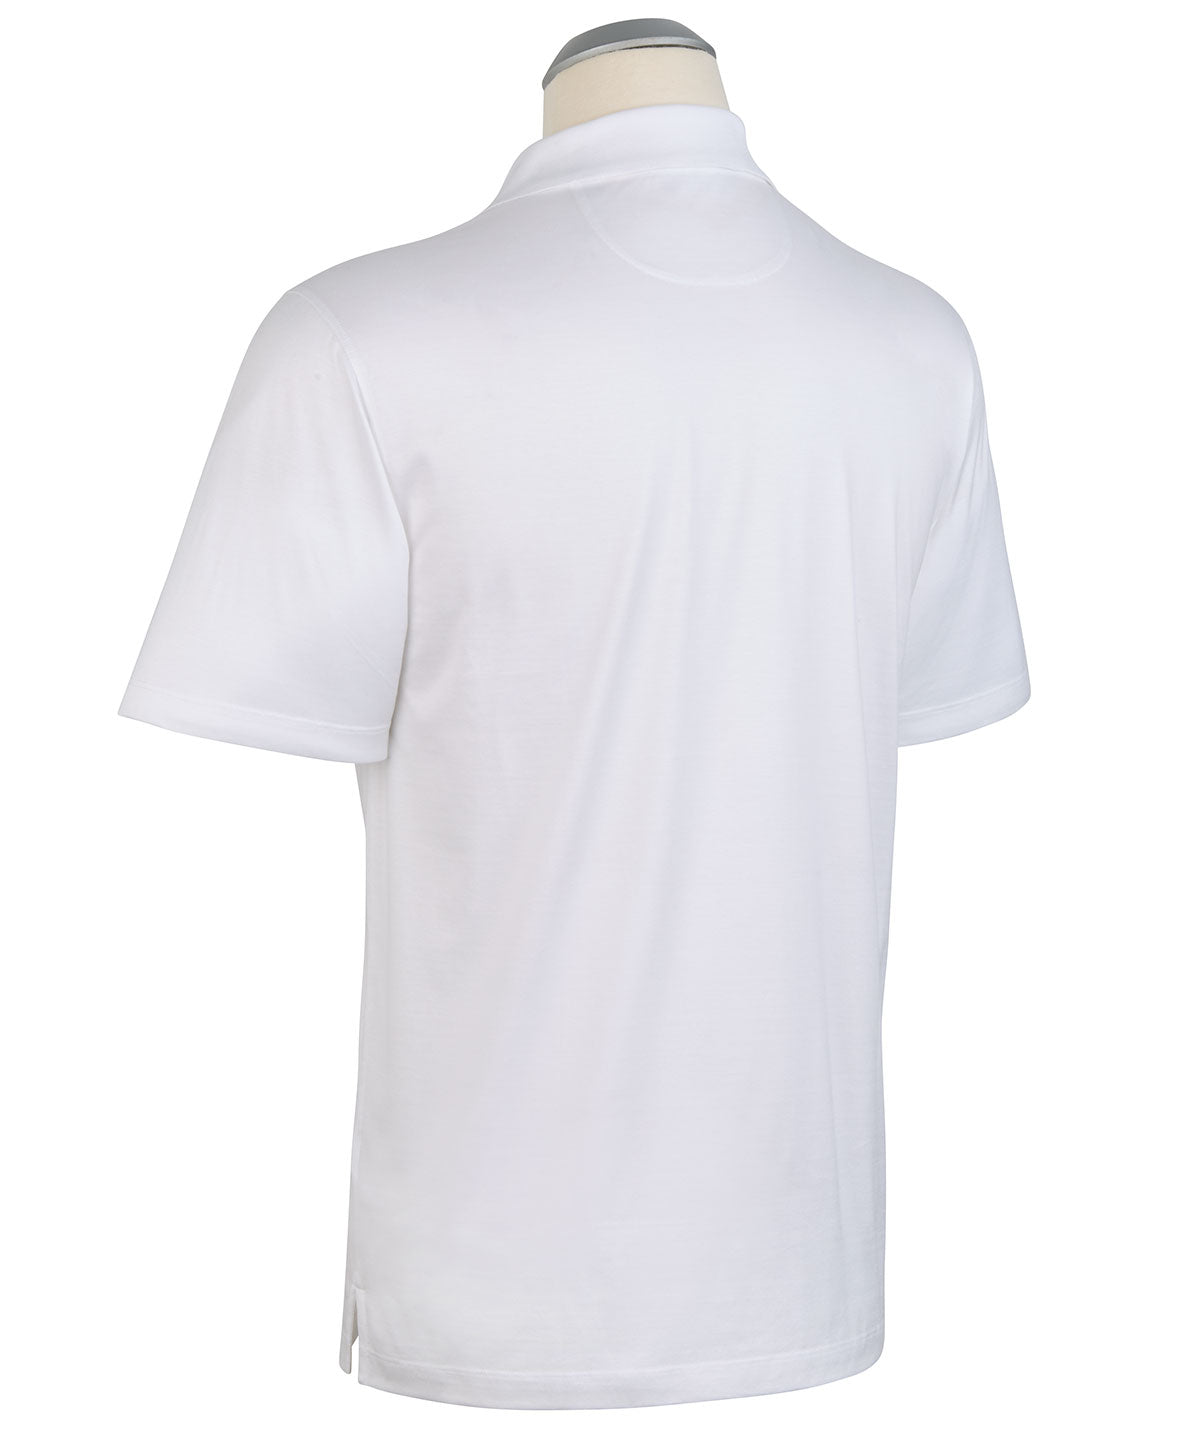 Heritage Italian Cotton Short Sleeve Polo Shirt